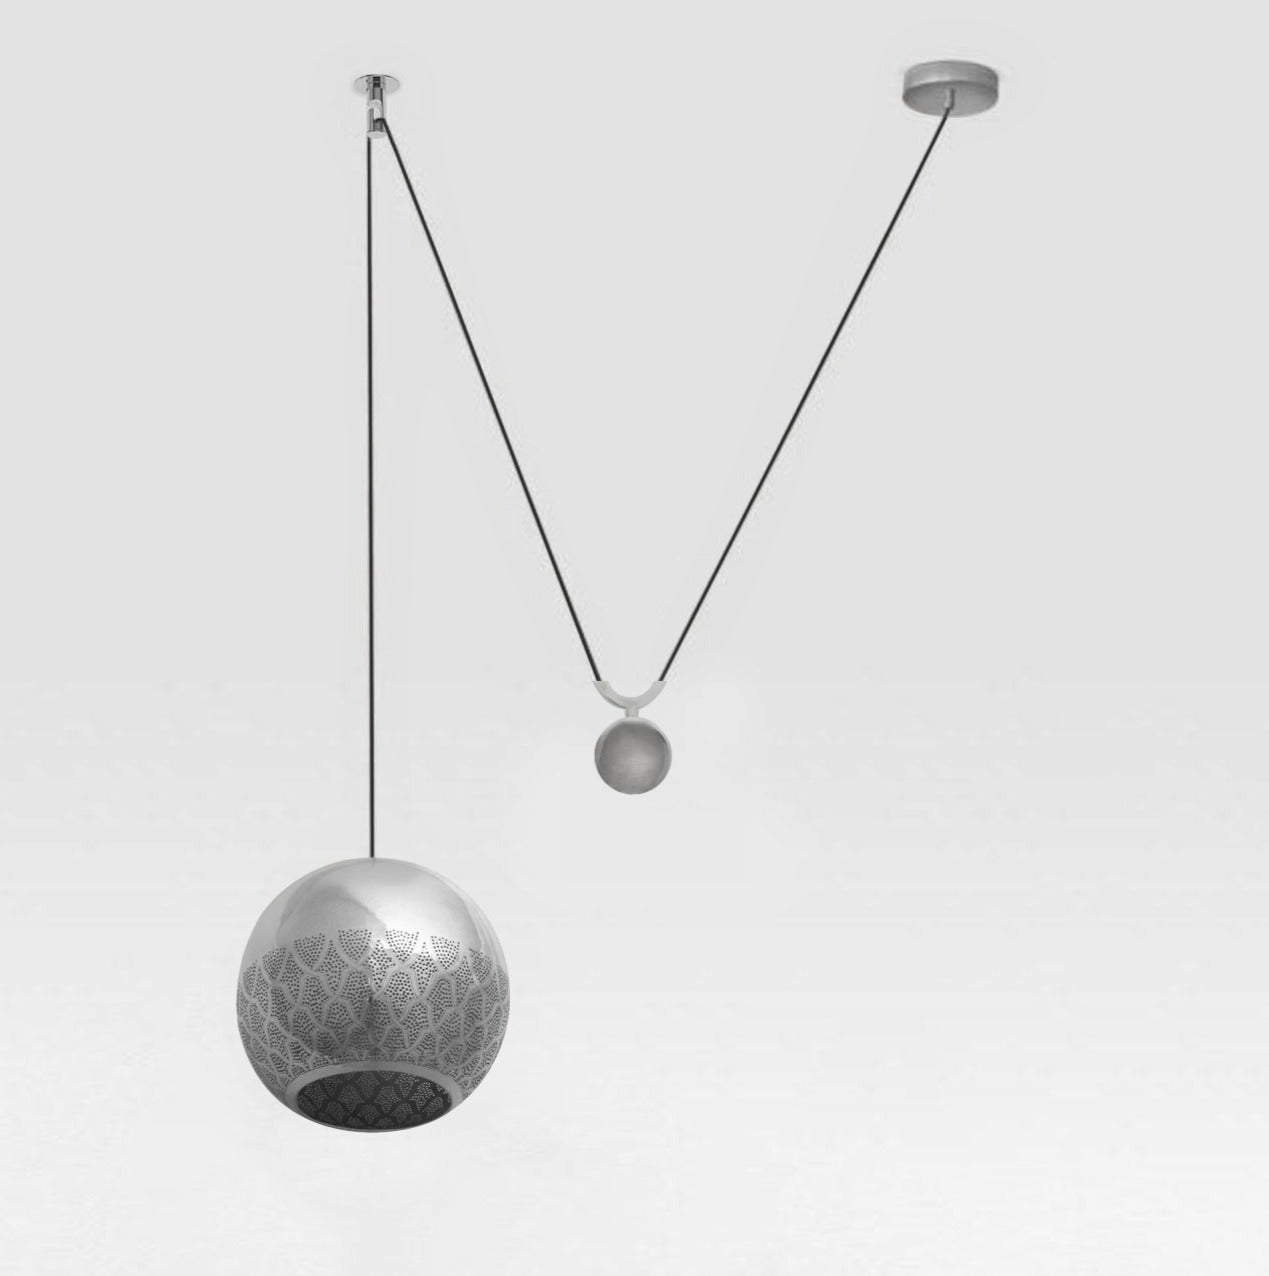 Sphere Counter-balance Weight Kit